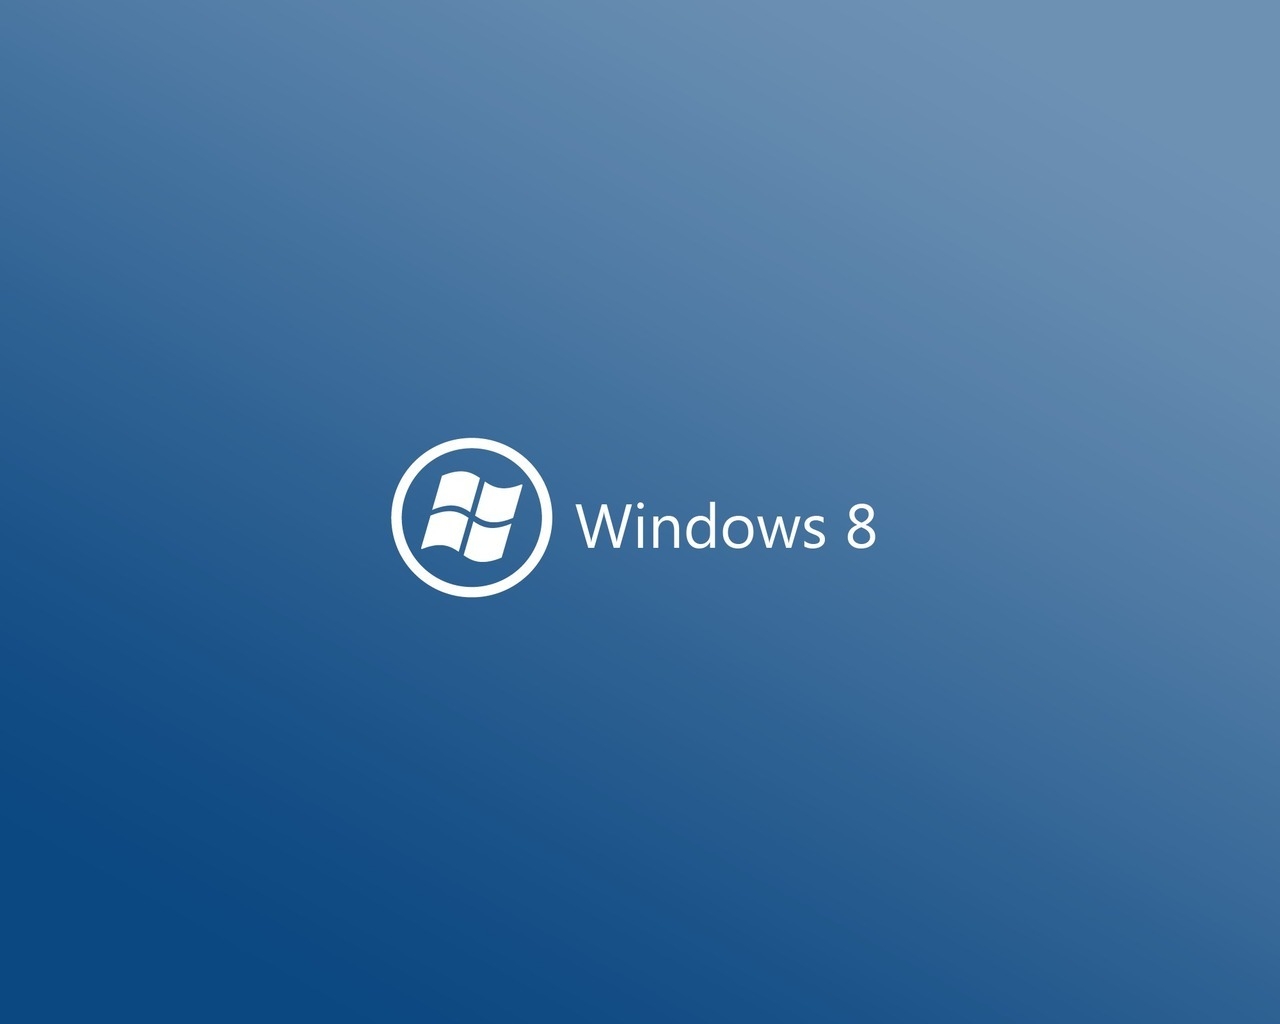 Windows 8 Logo for 1280 x 1024 resolution